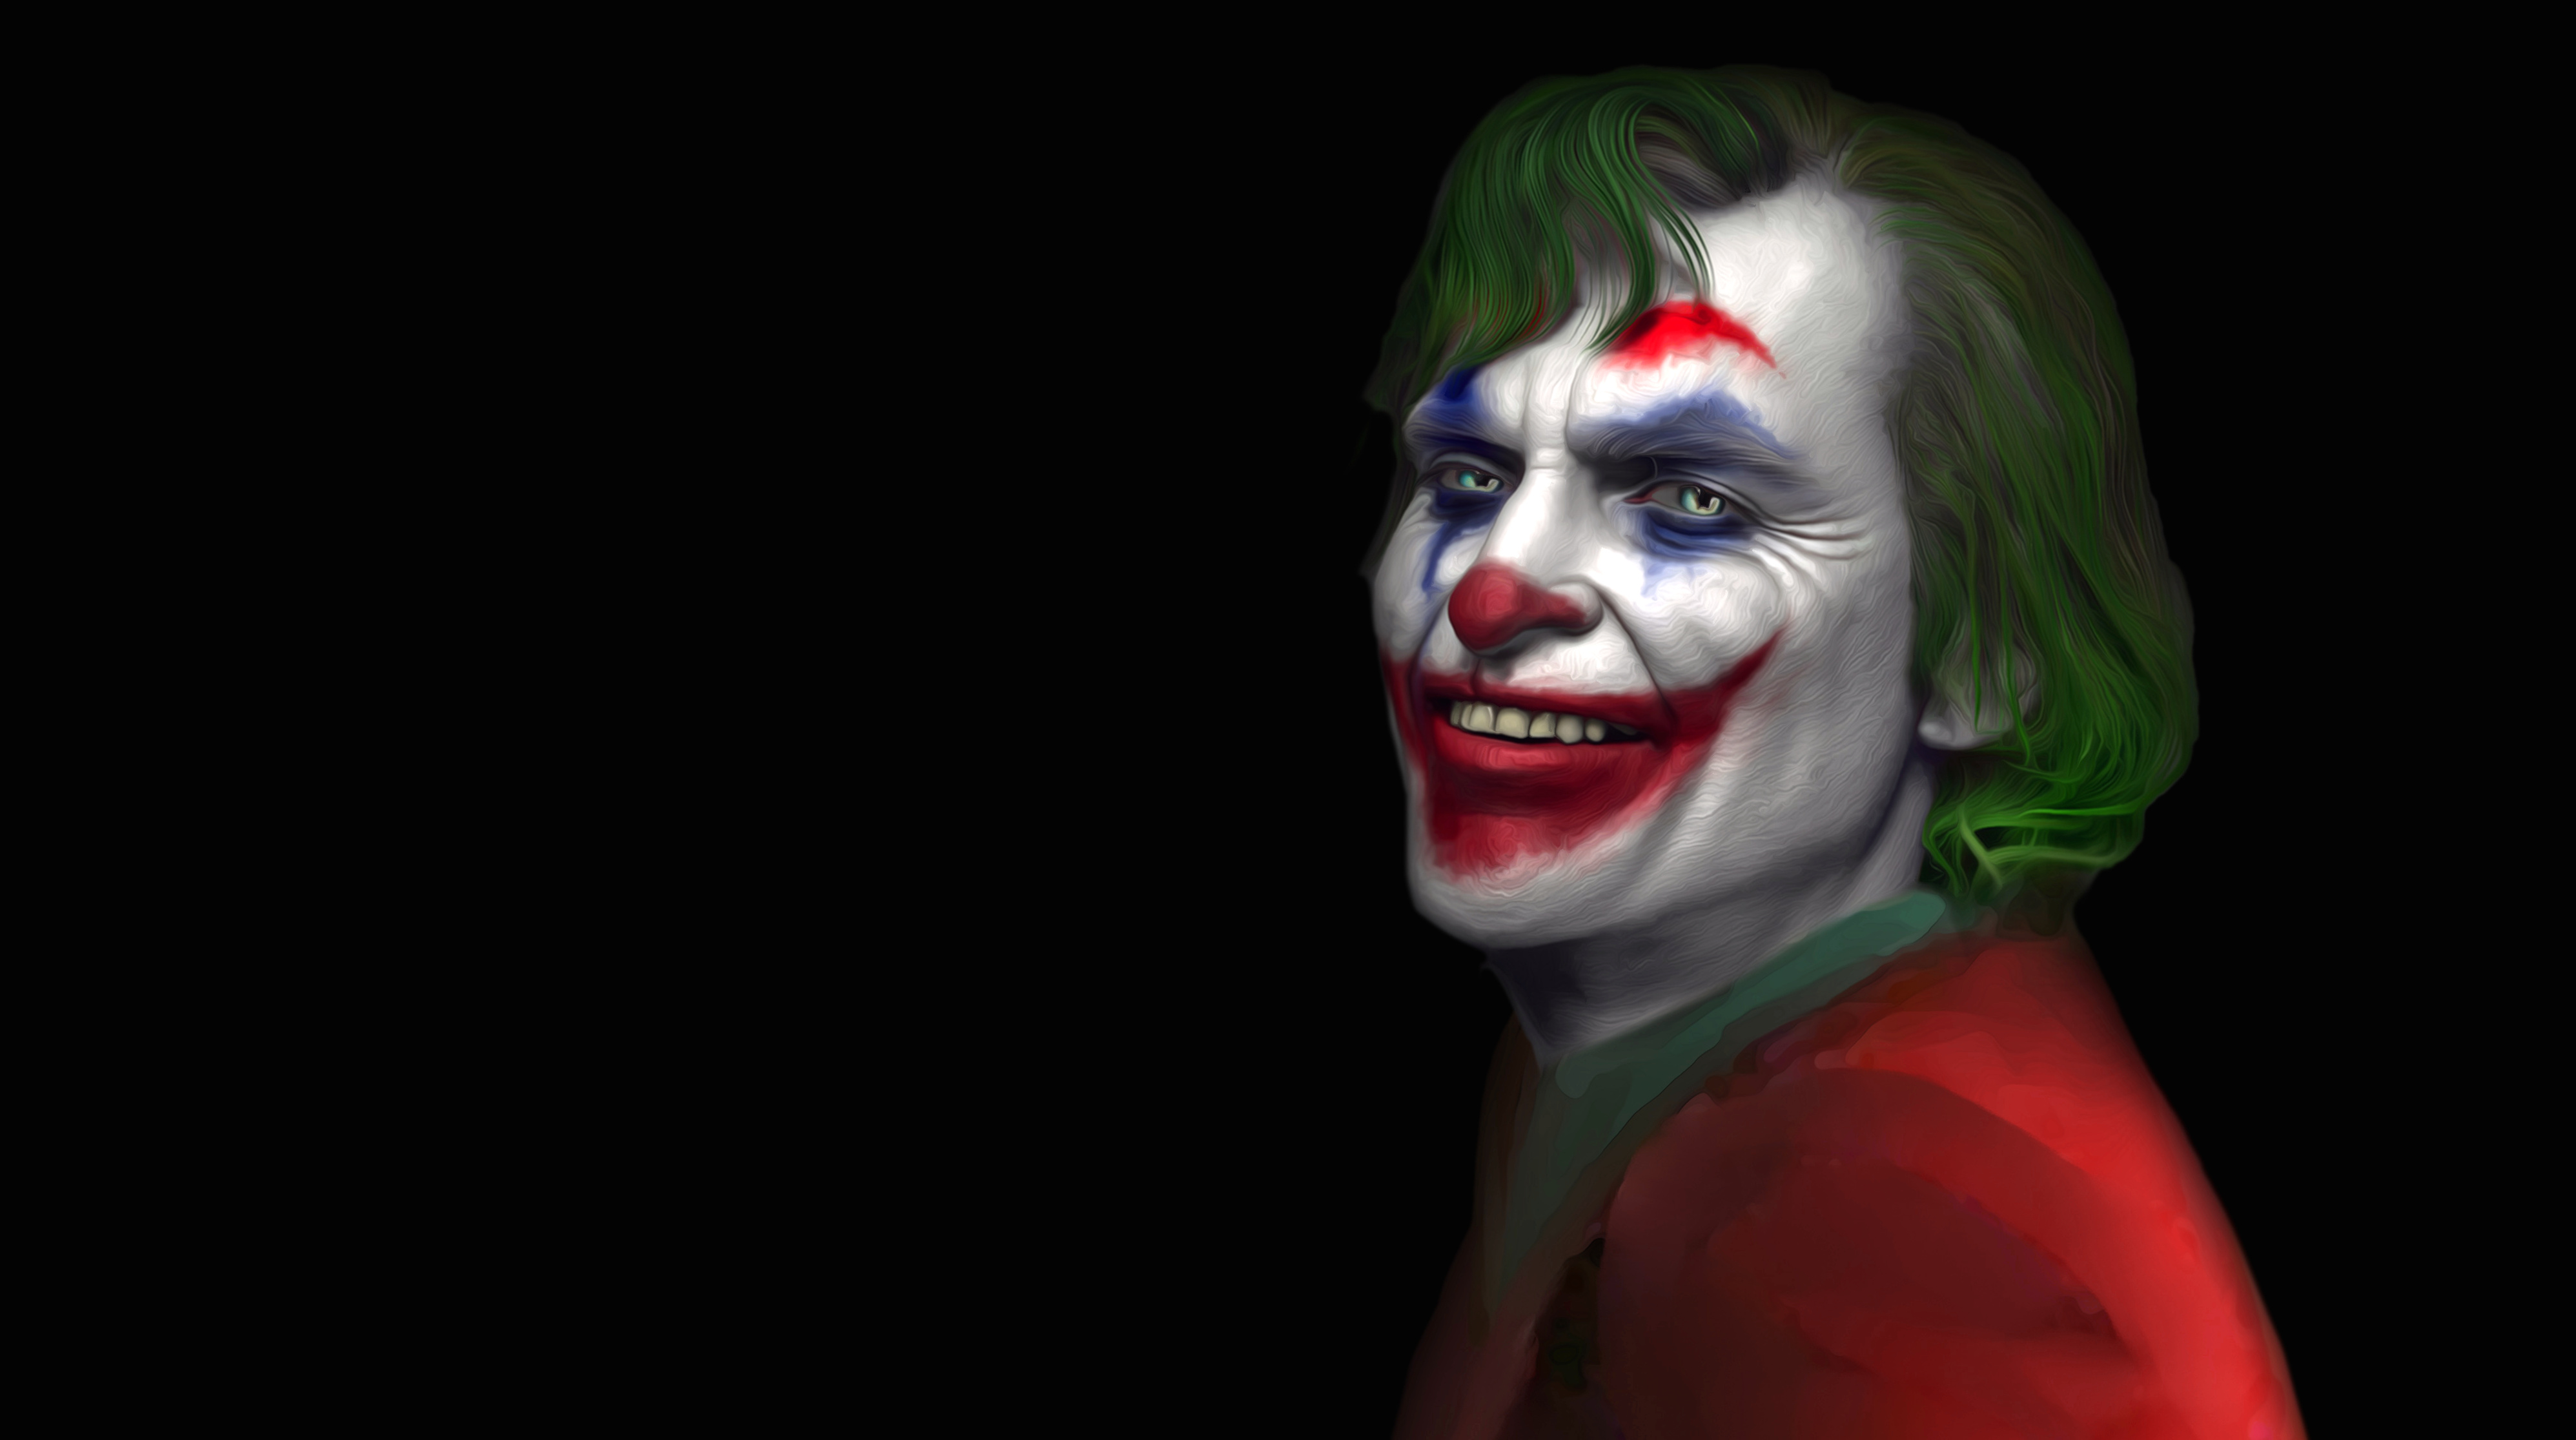 Joker 2019 Wallpaper - Joker Joaquin Phoenix Wallpaper 8k - 3990x2230  Wallpaper 